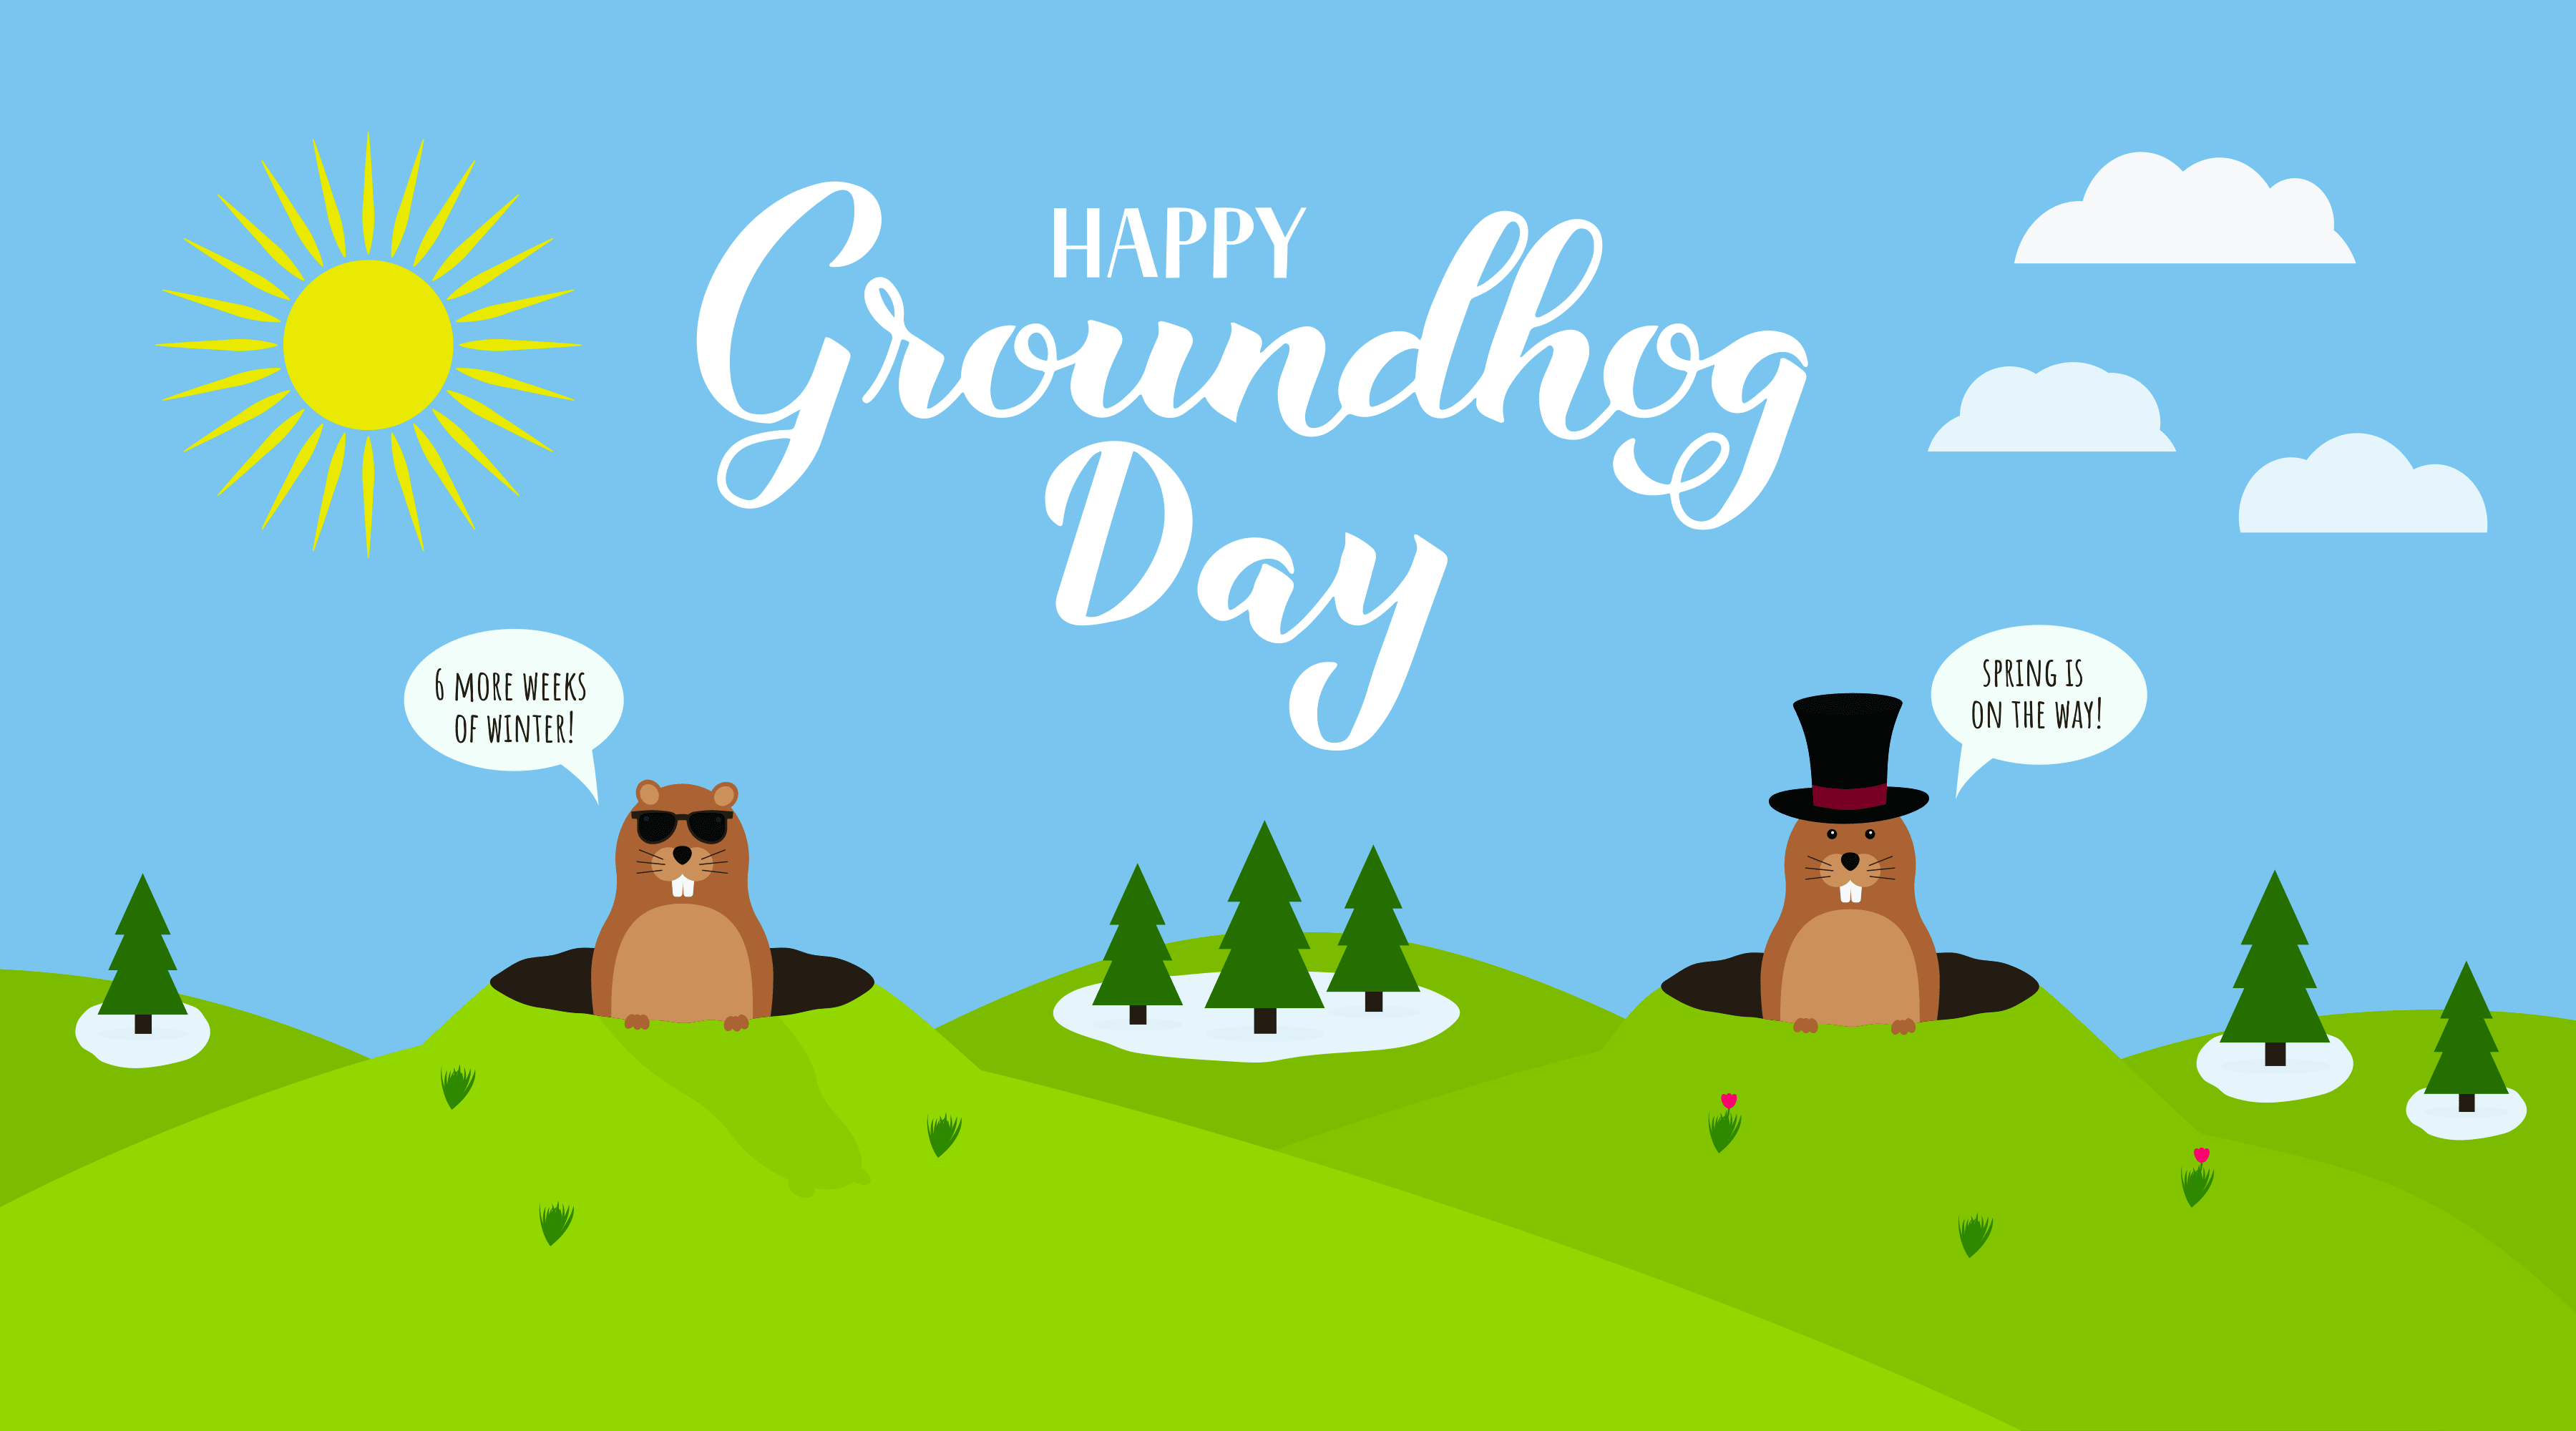 Groundhog day email marketing ideas